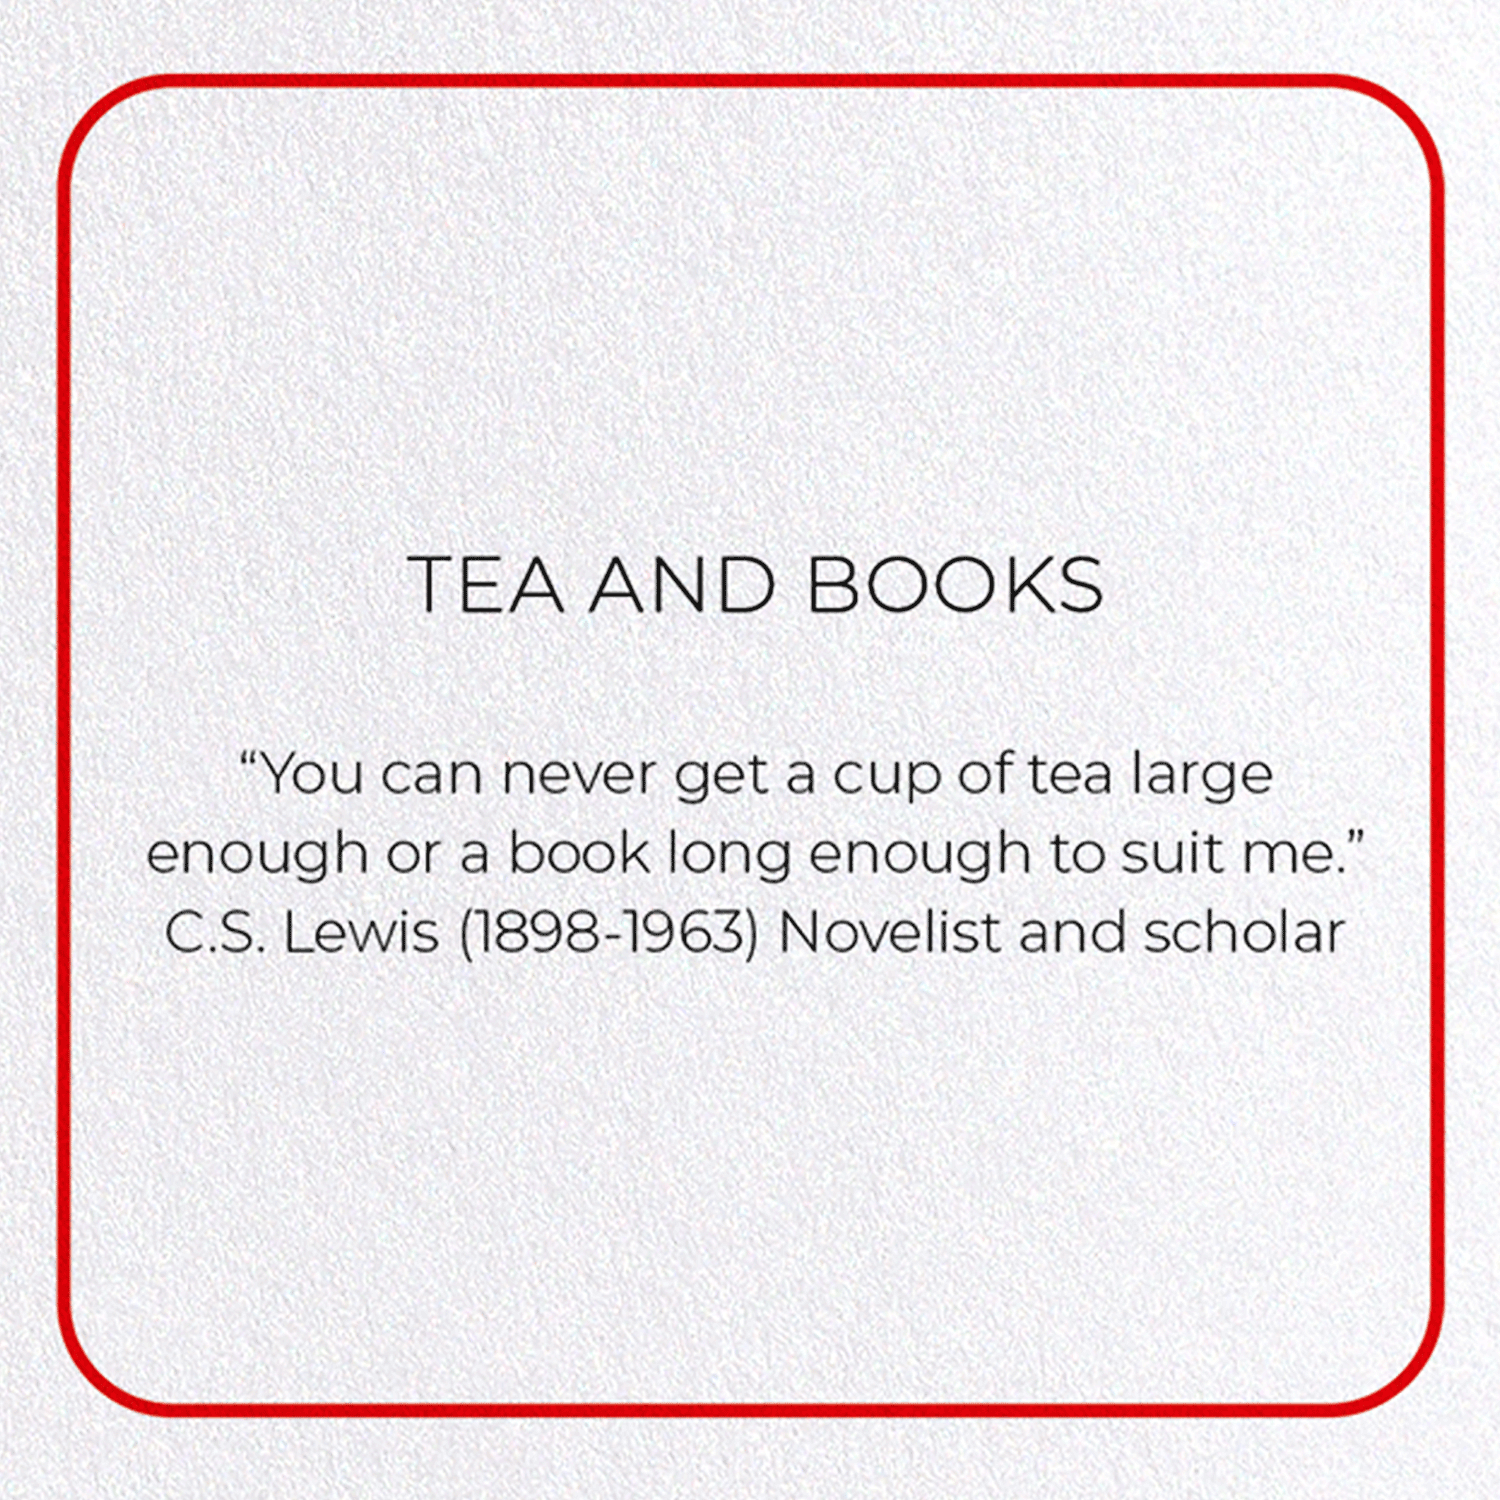 TEA AND BOOKS